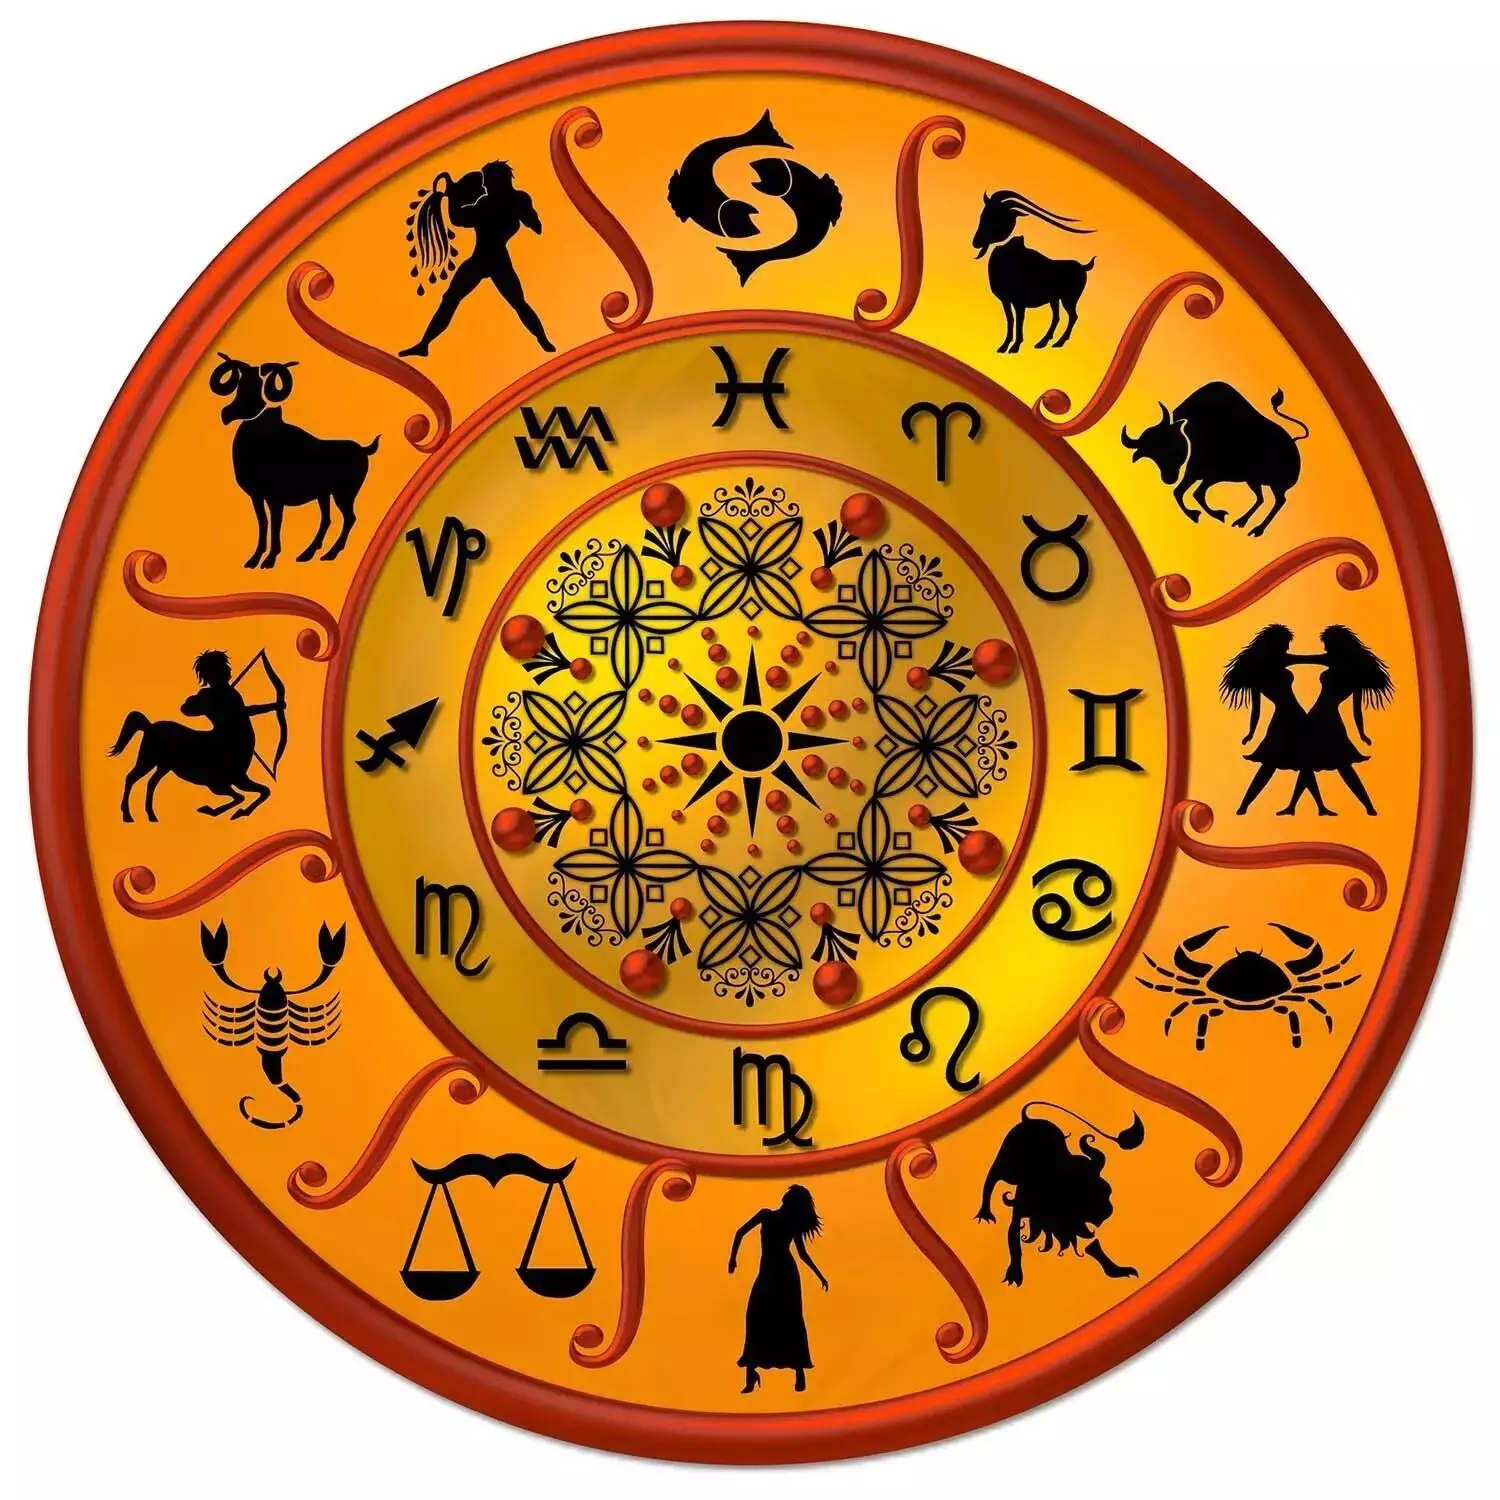 15  Novembar  – Know your todays horoscope